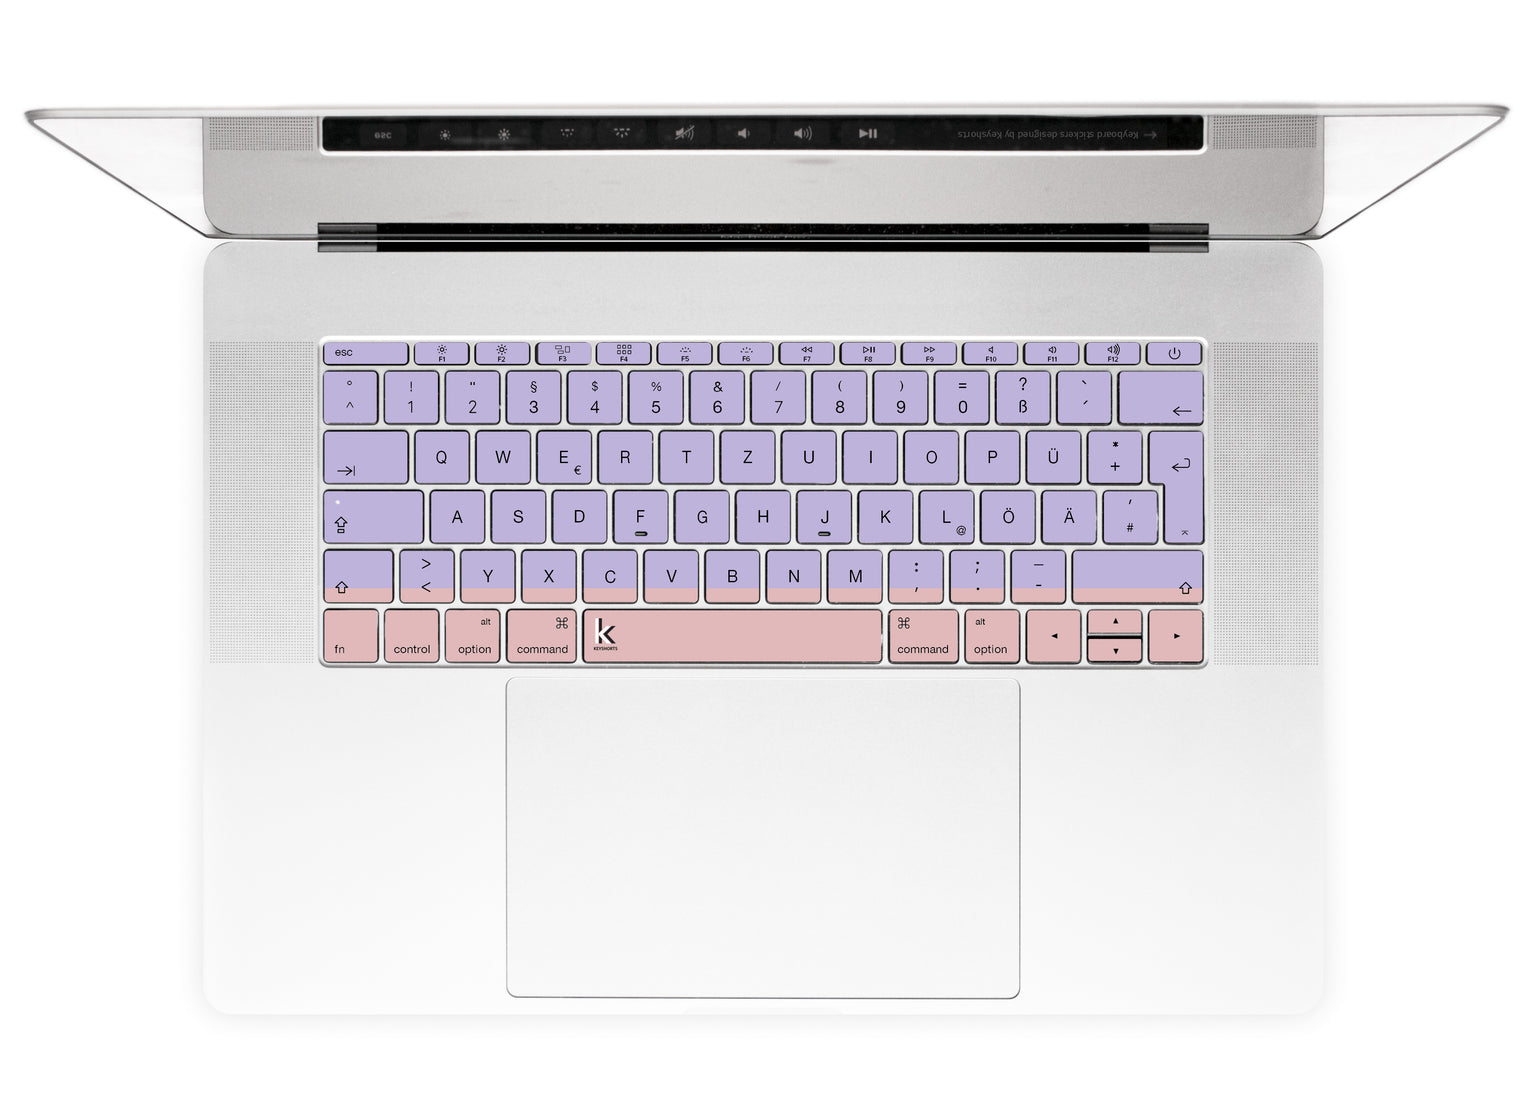 Pastelove Duo MacBook Keyboard Stickers alternate DE